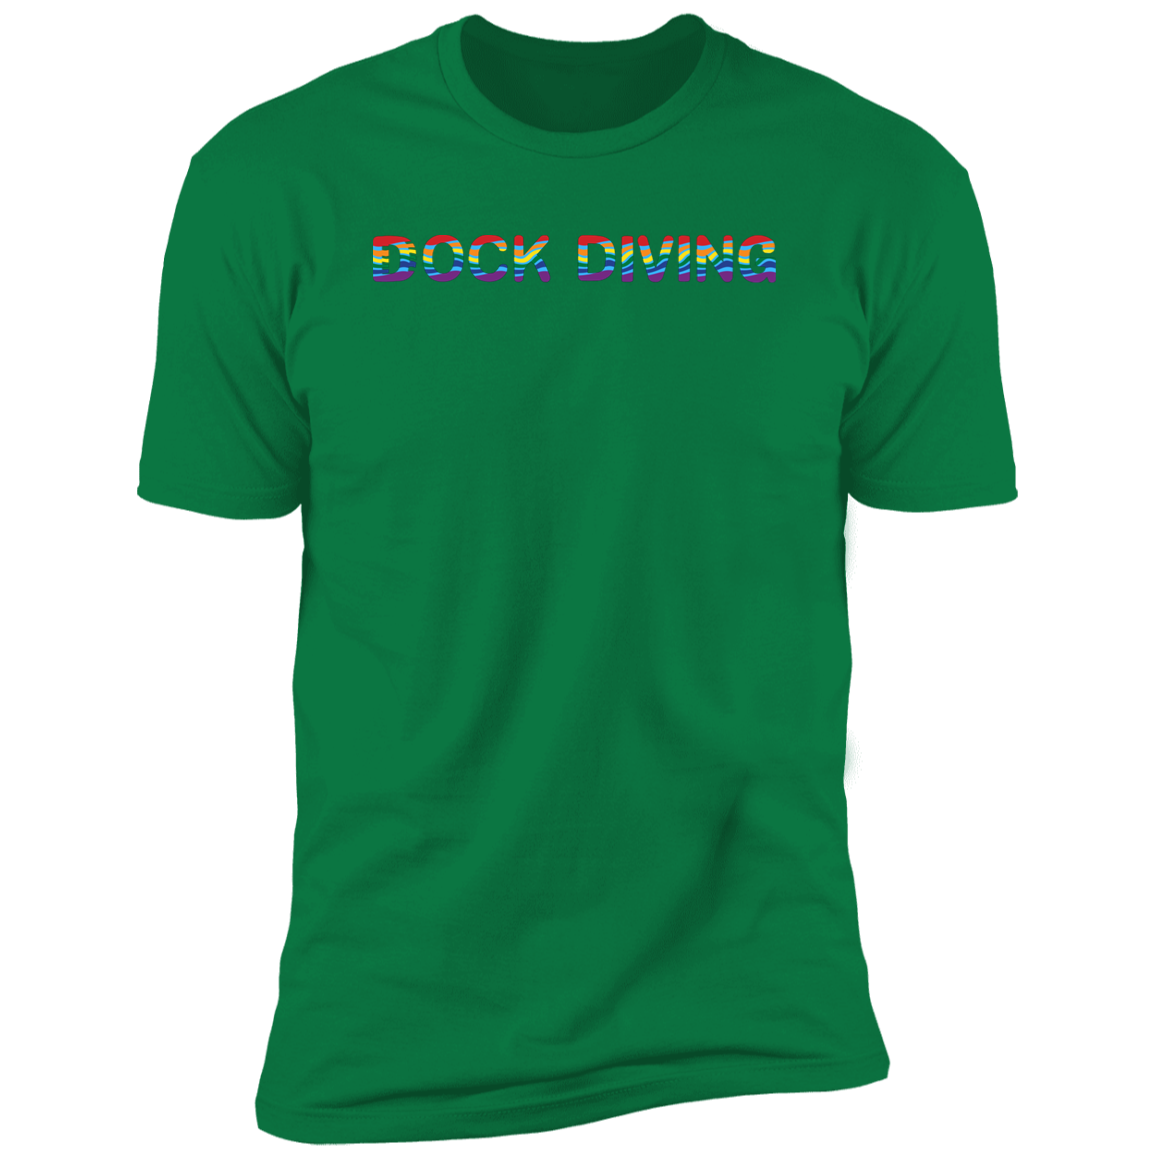 Dock Diving Pride Dock diving t-shirt, dog pride dock diving shirt for humans, in kelly green